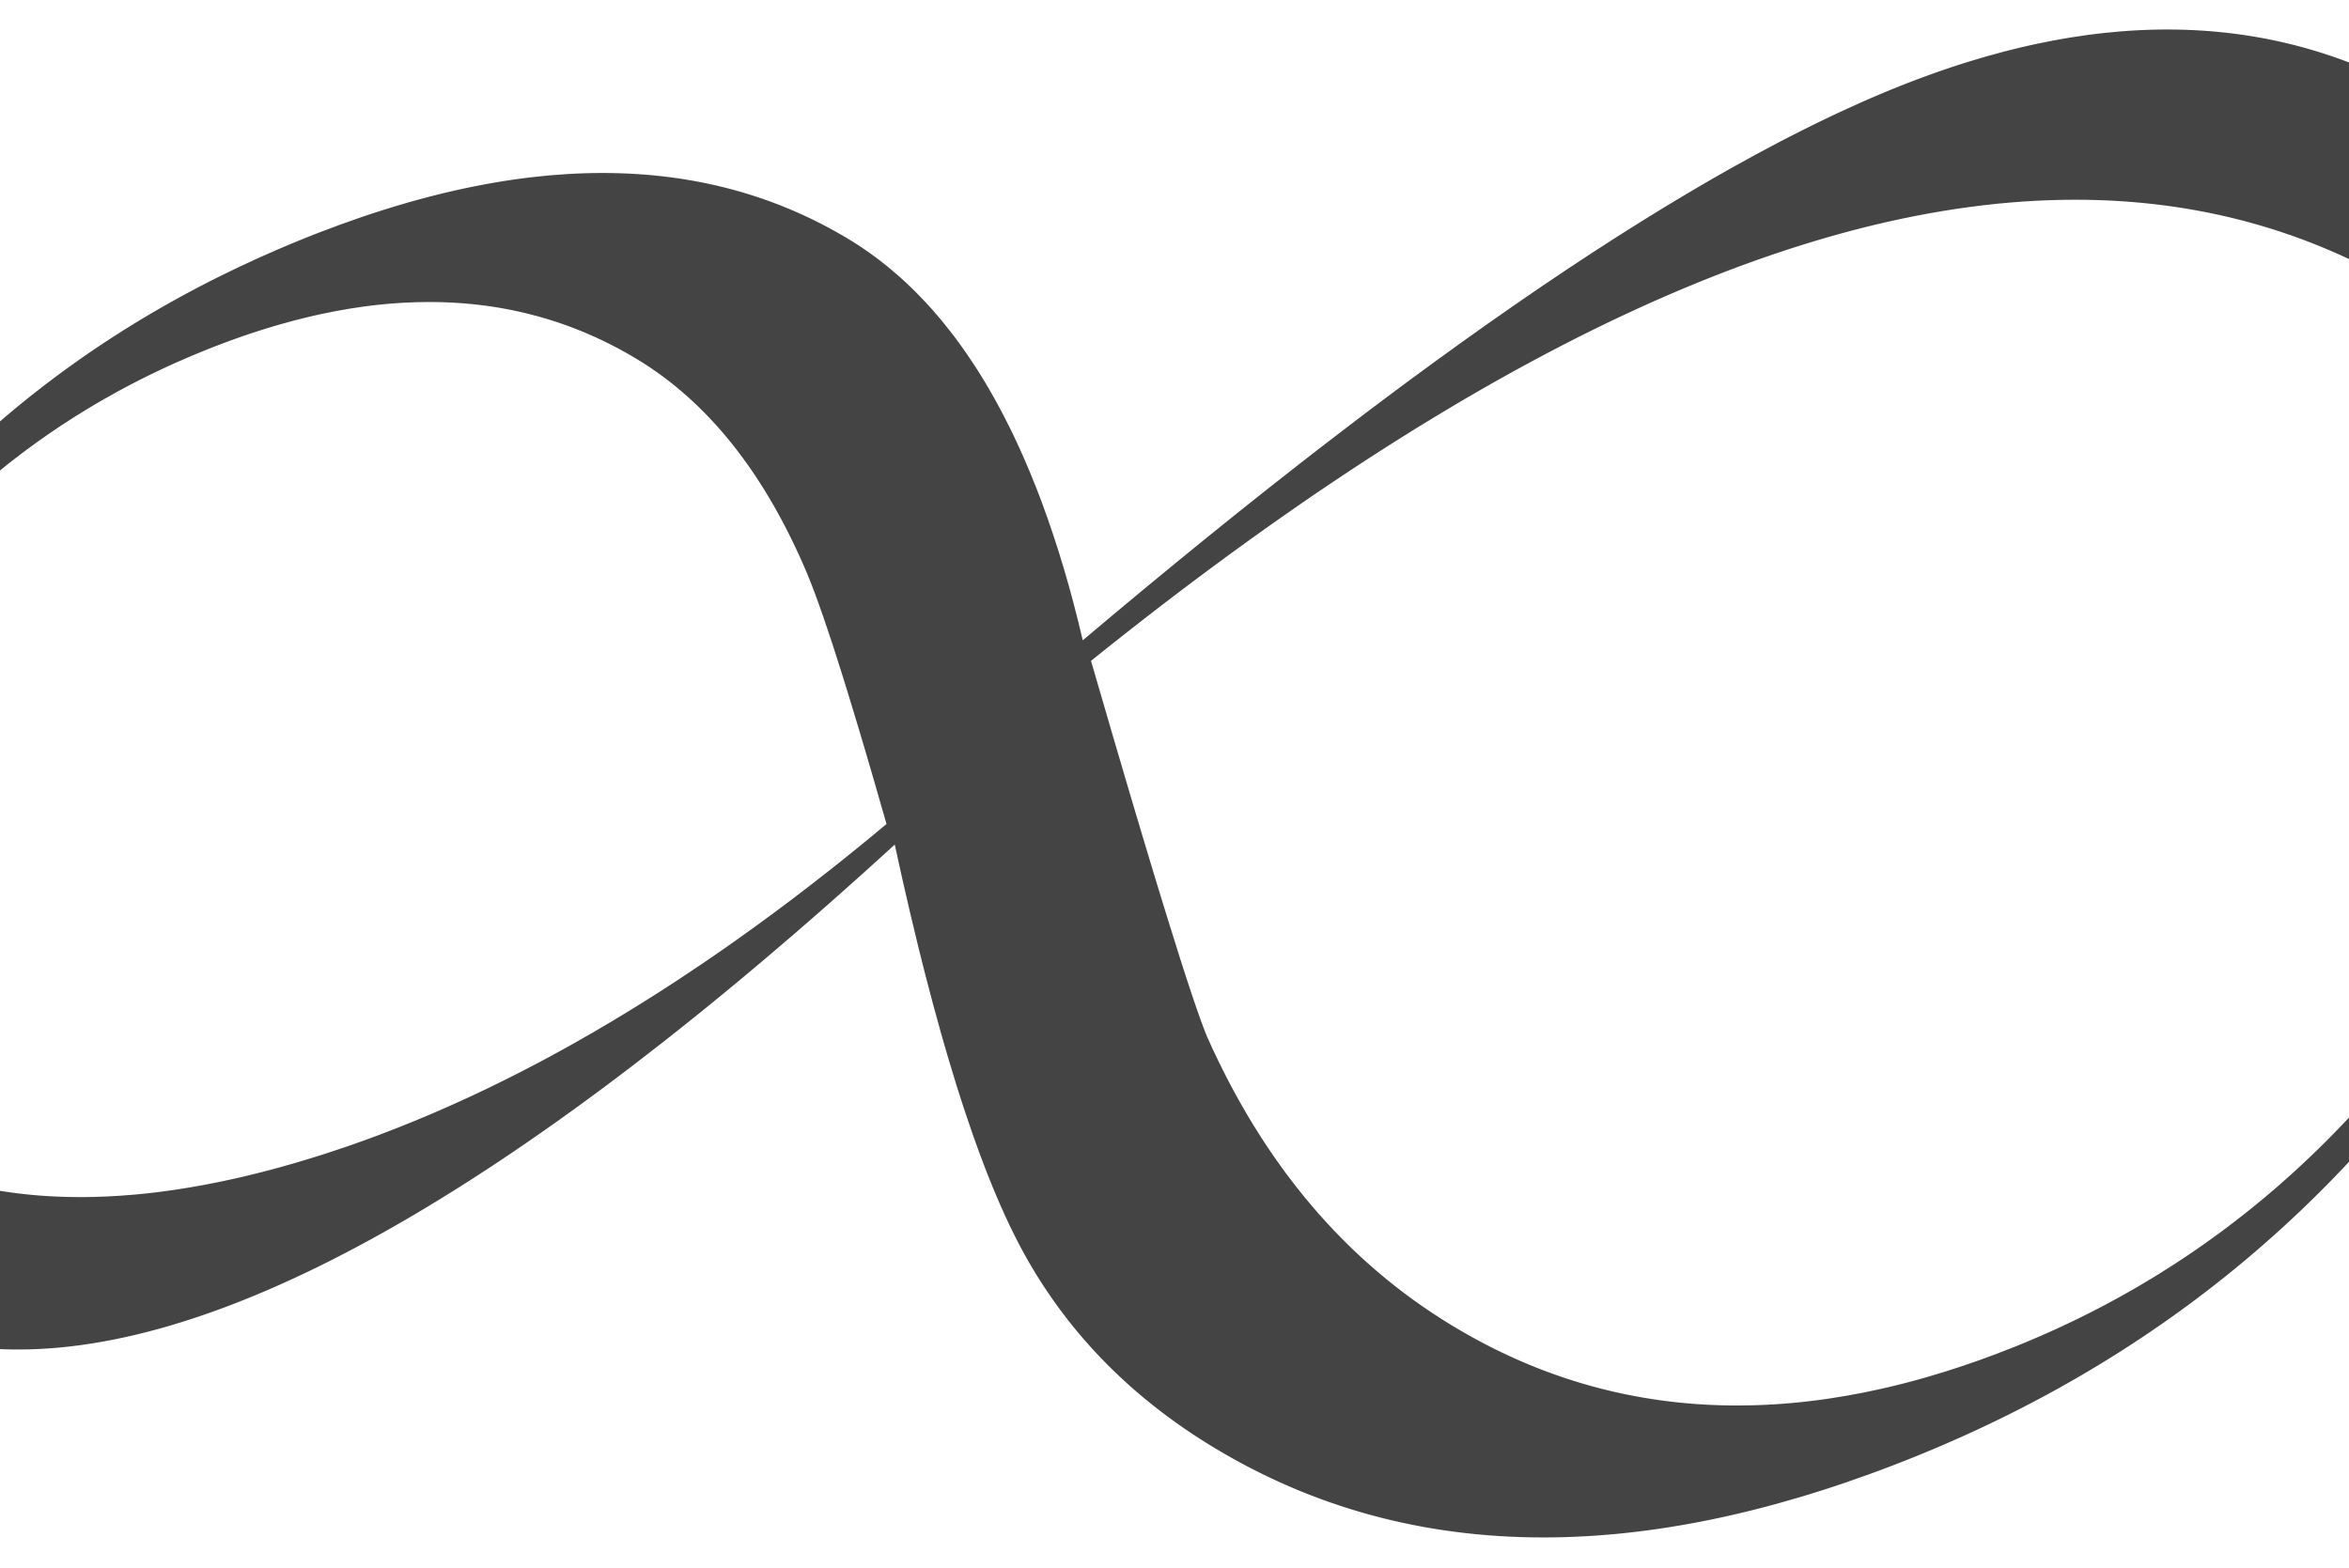 Infiniti logo free vector